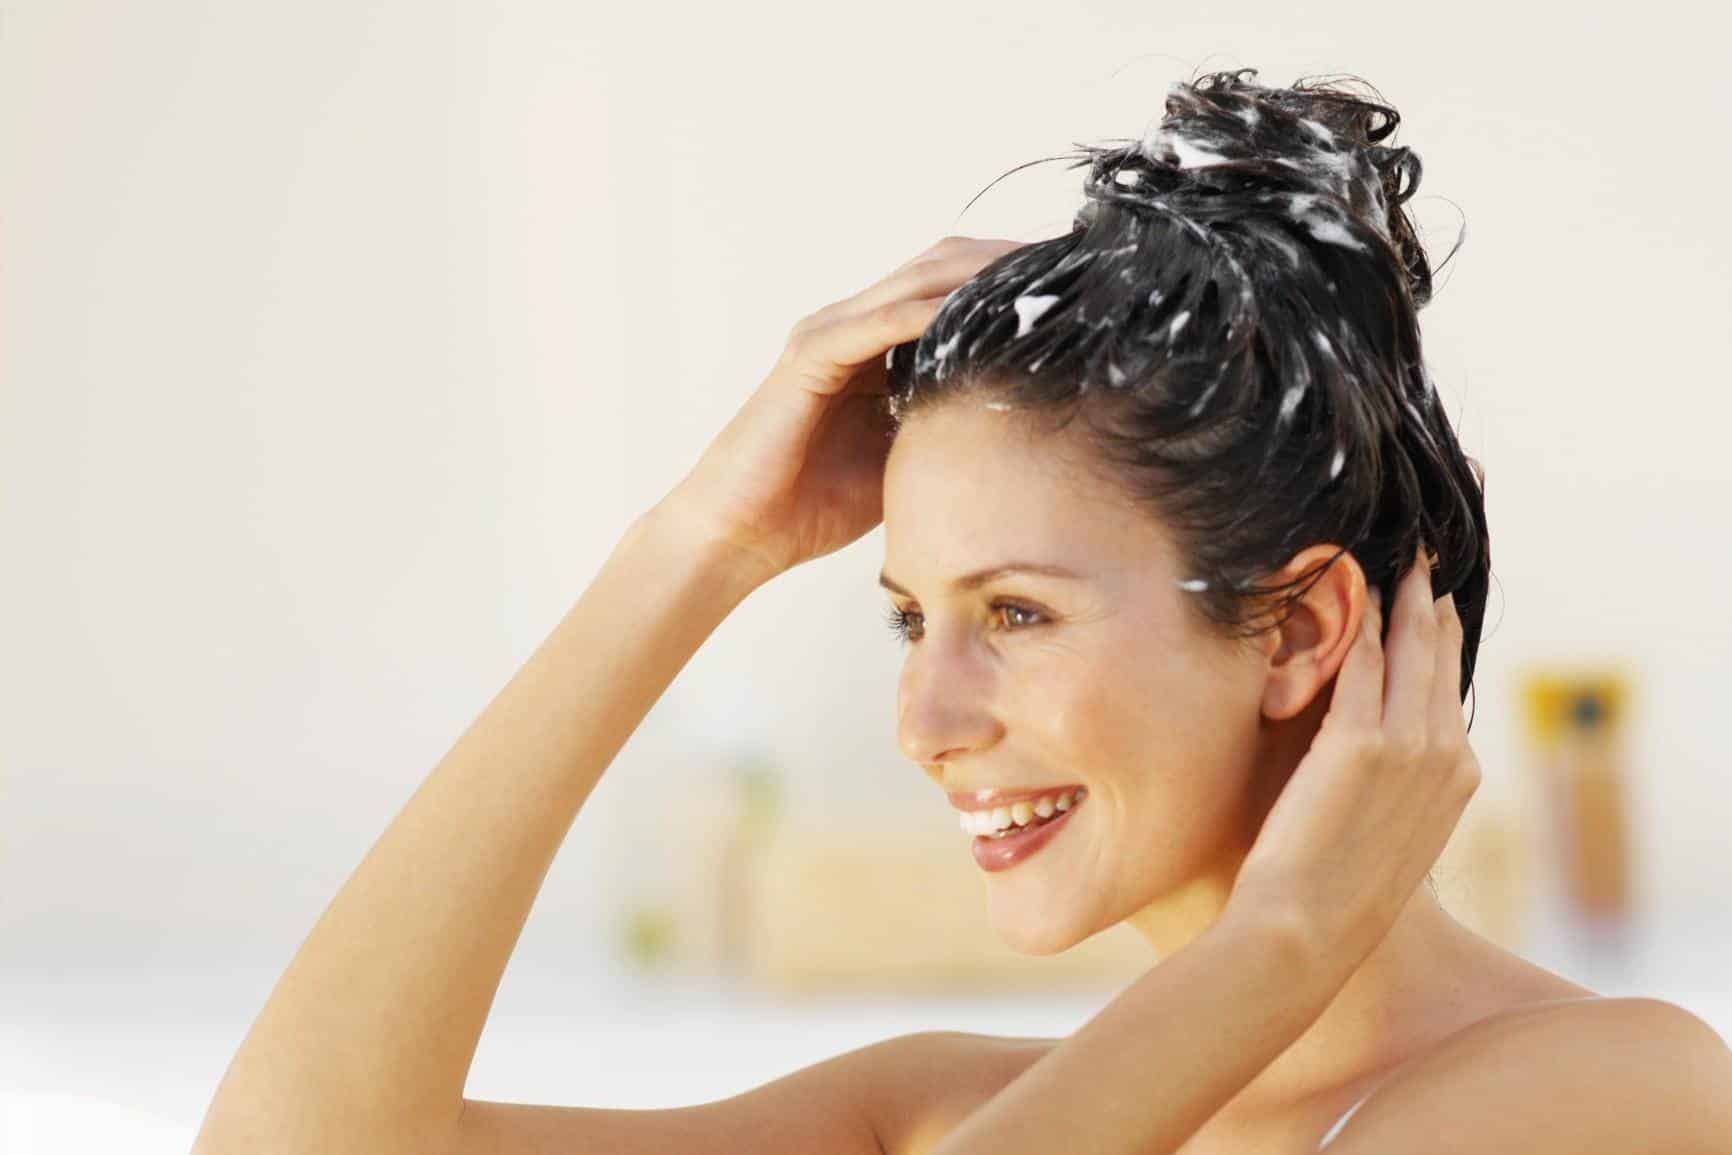 How to pre-shampoo